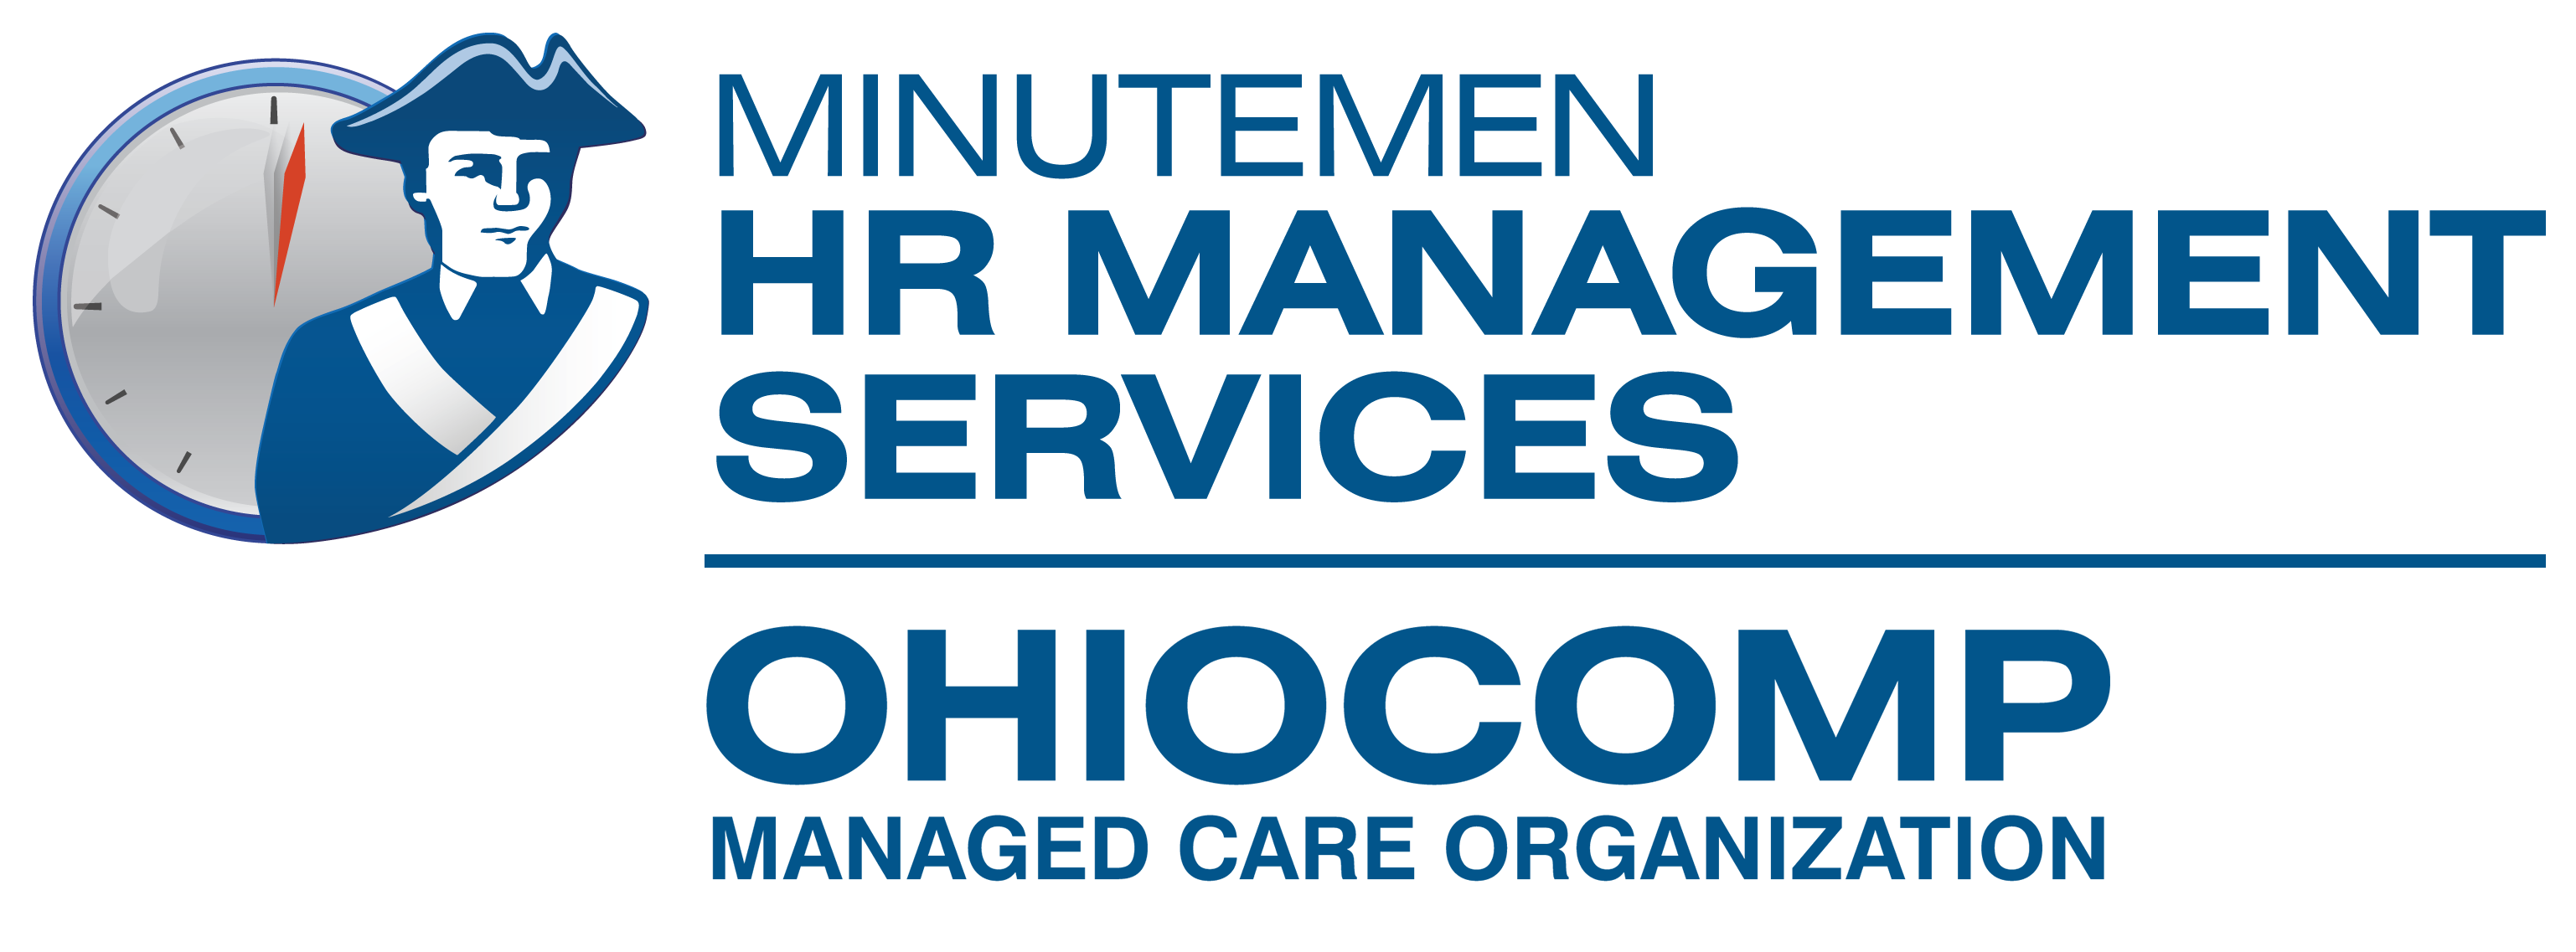 minutemen HR Management Services and OhioComp Managed Care